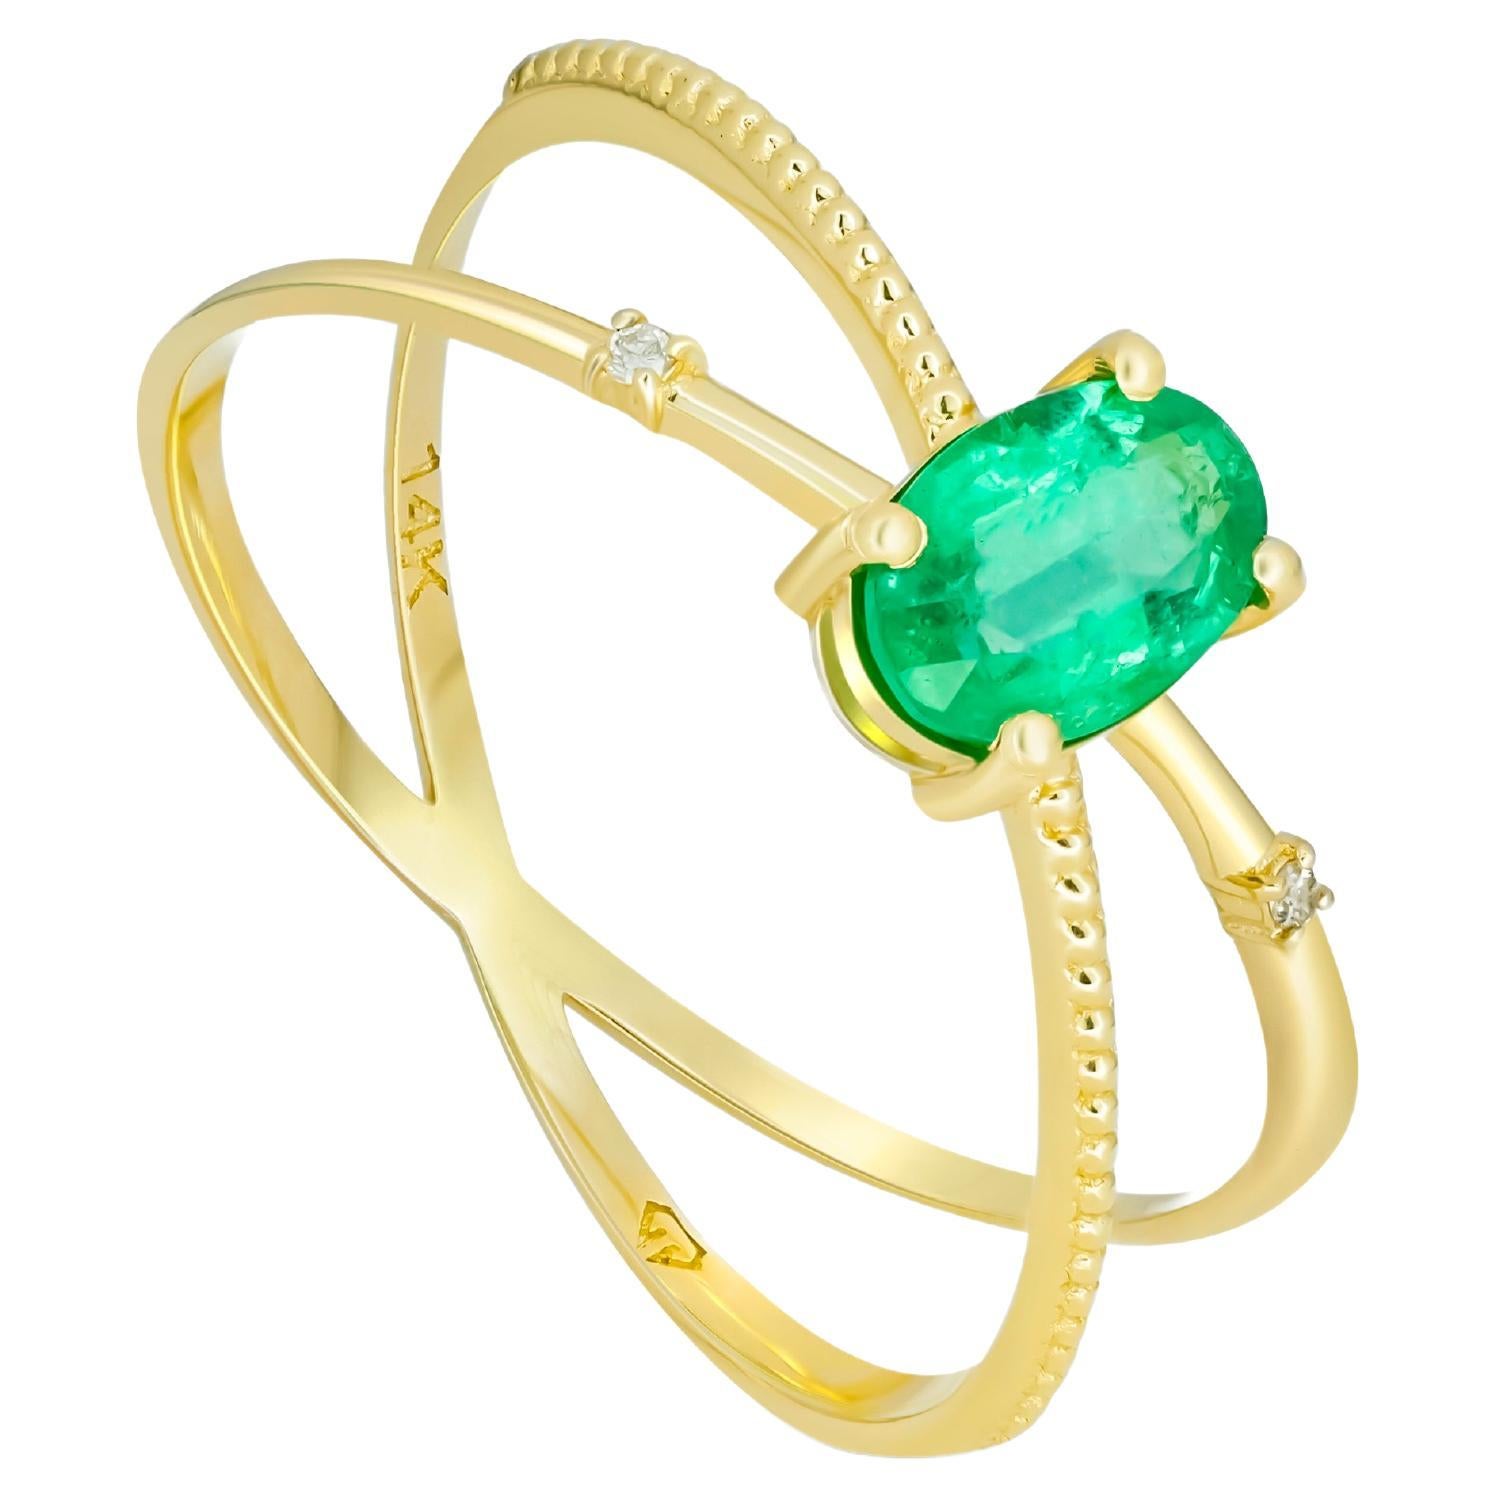 Emerald spiral ring. 